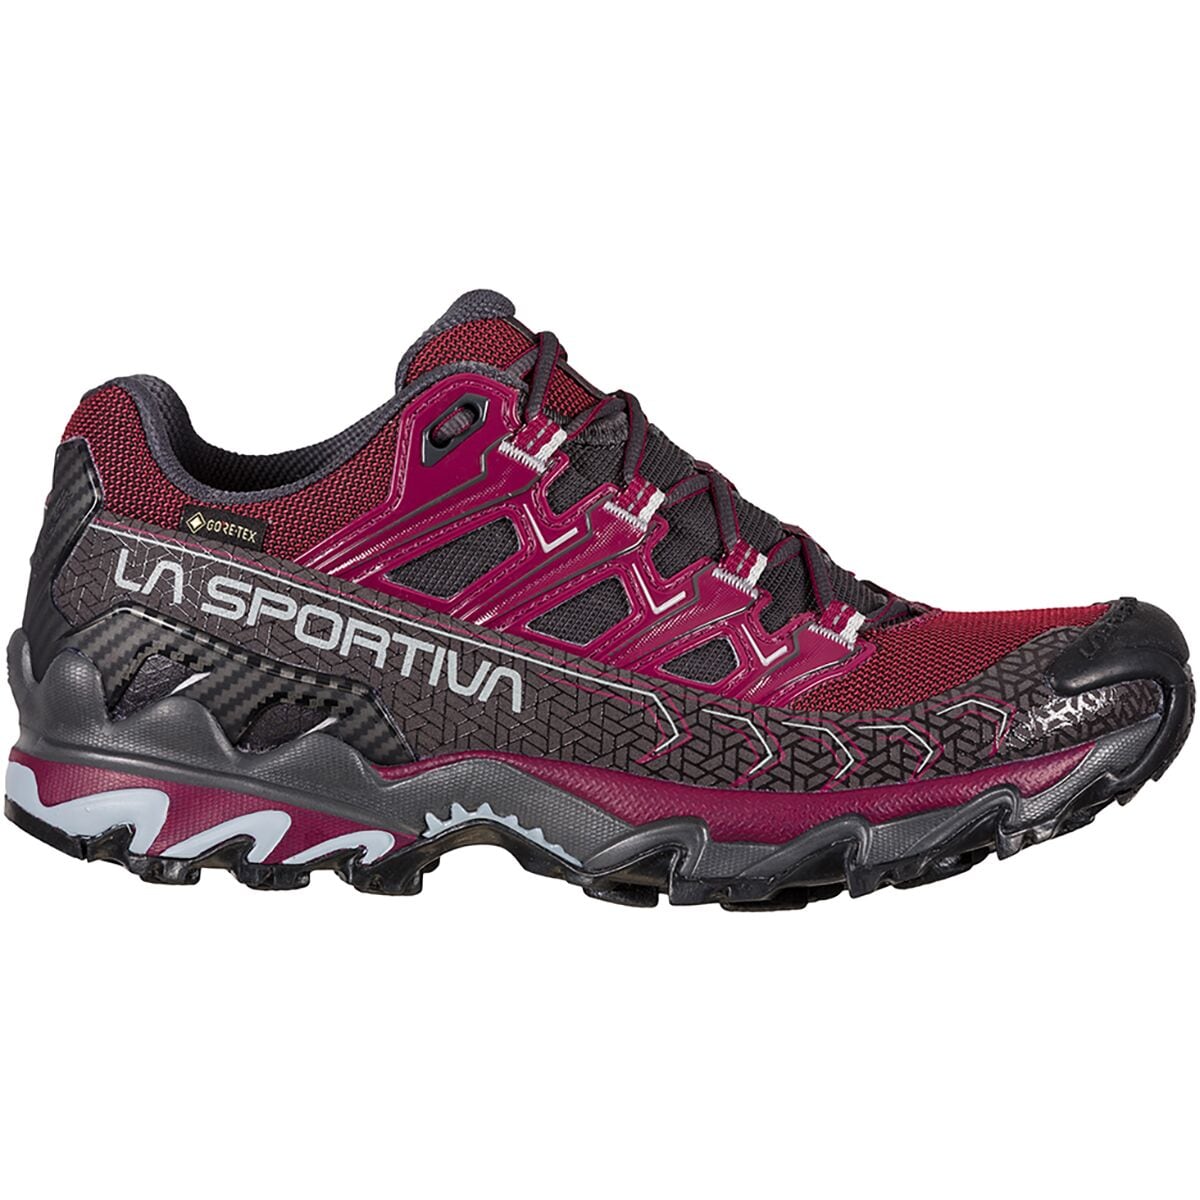 Ultra Raptor II GTX Trail Running Shoe - Women